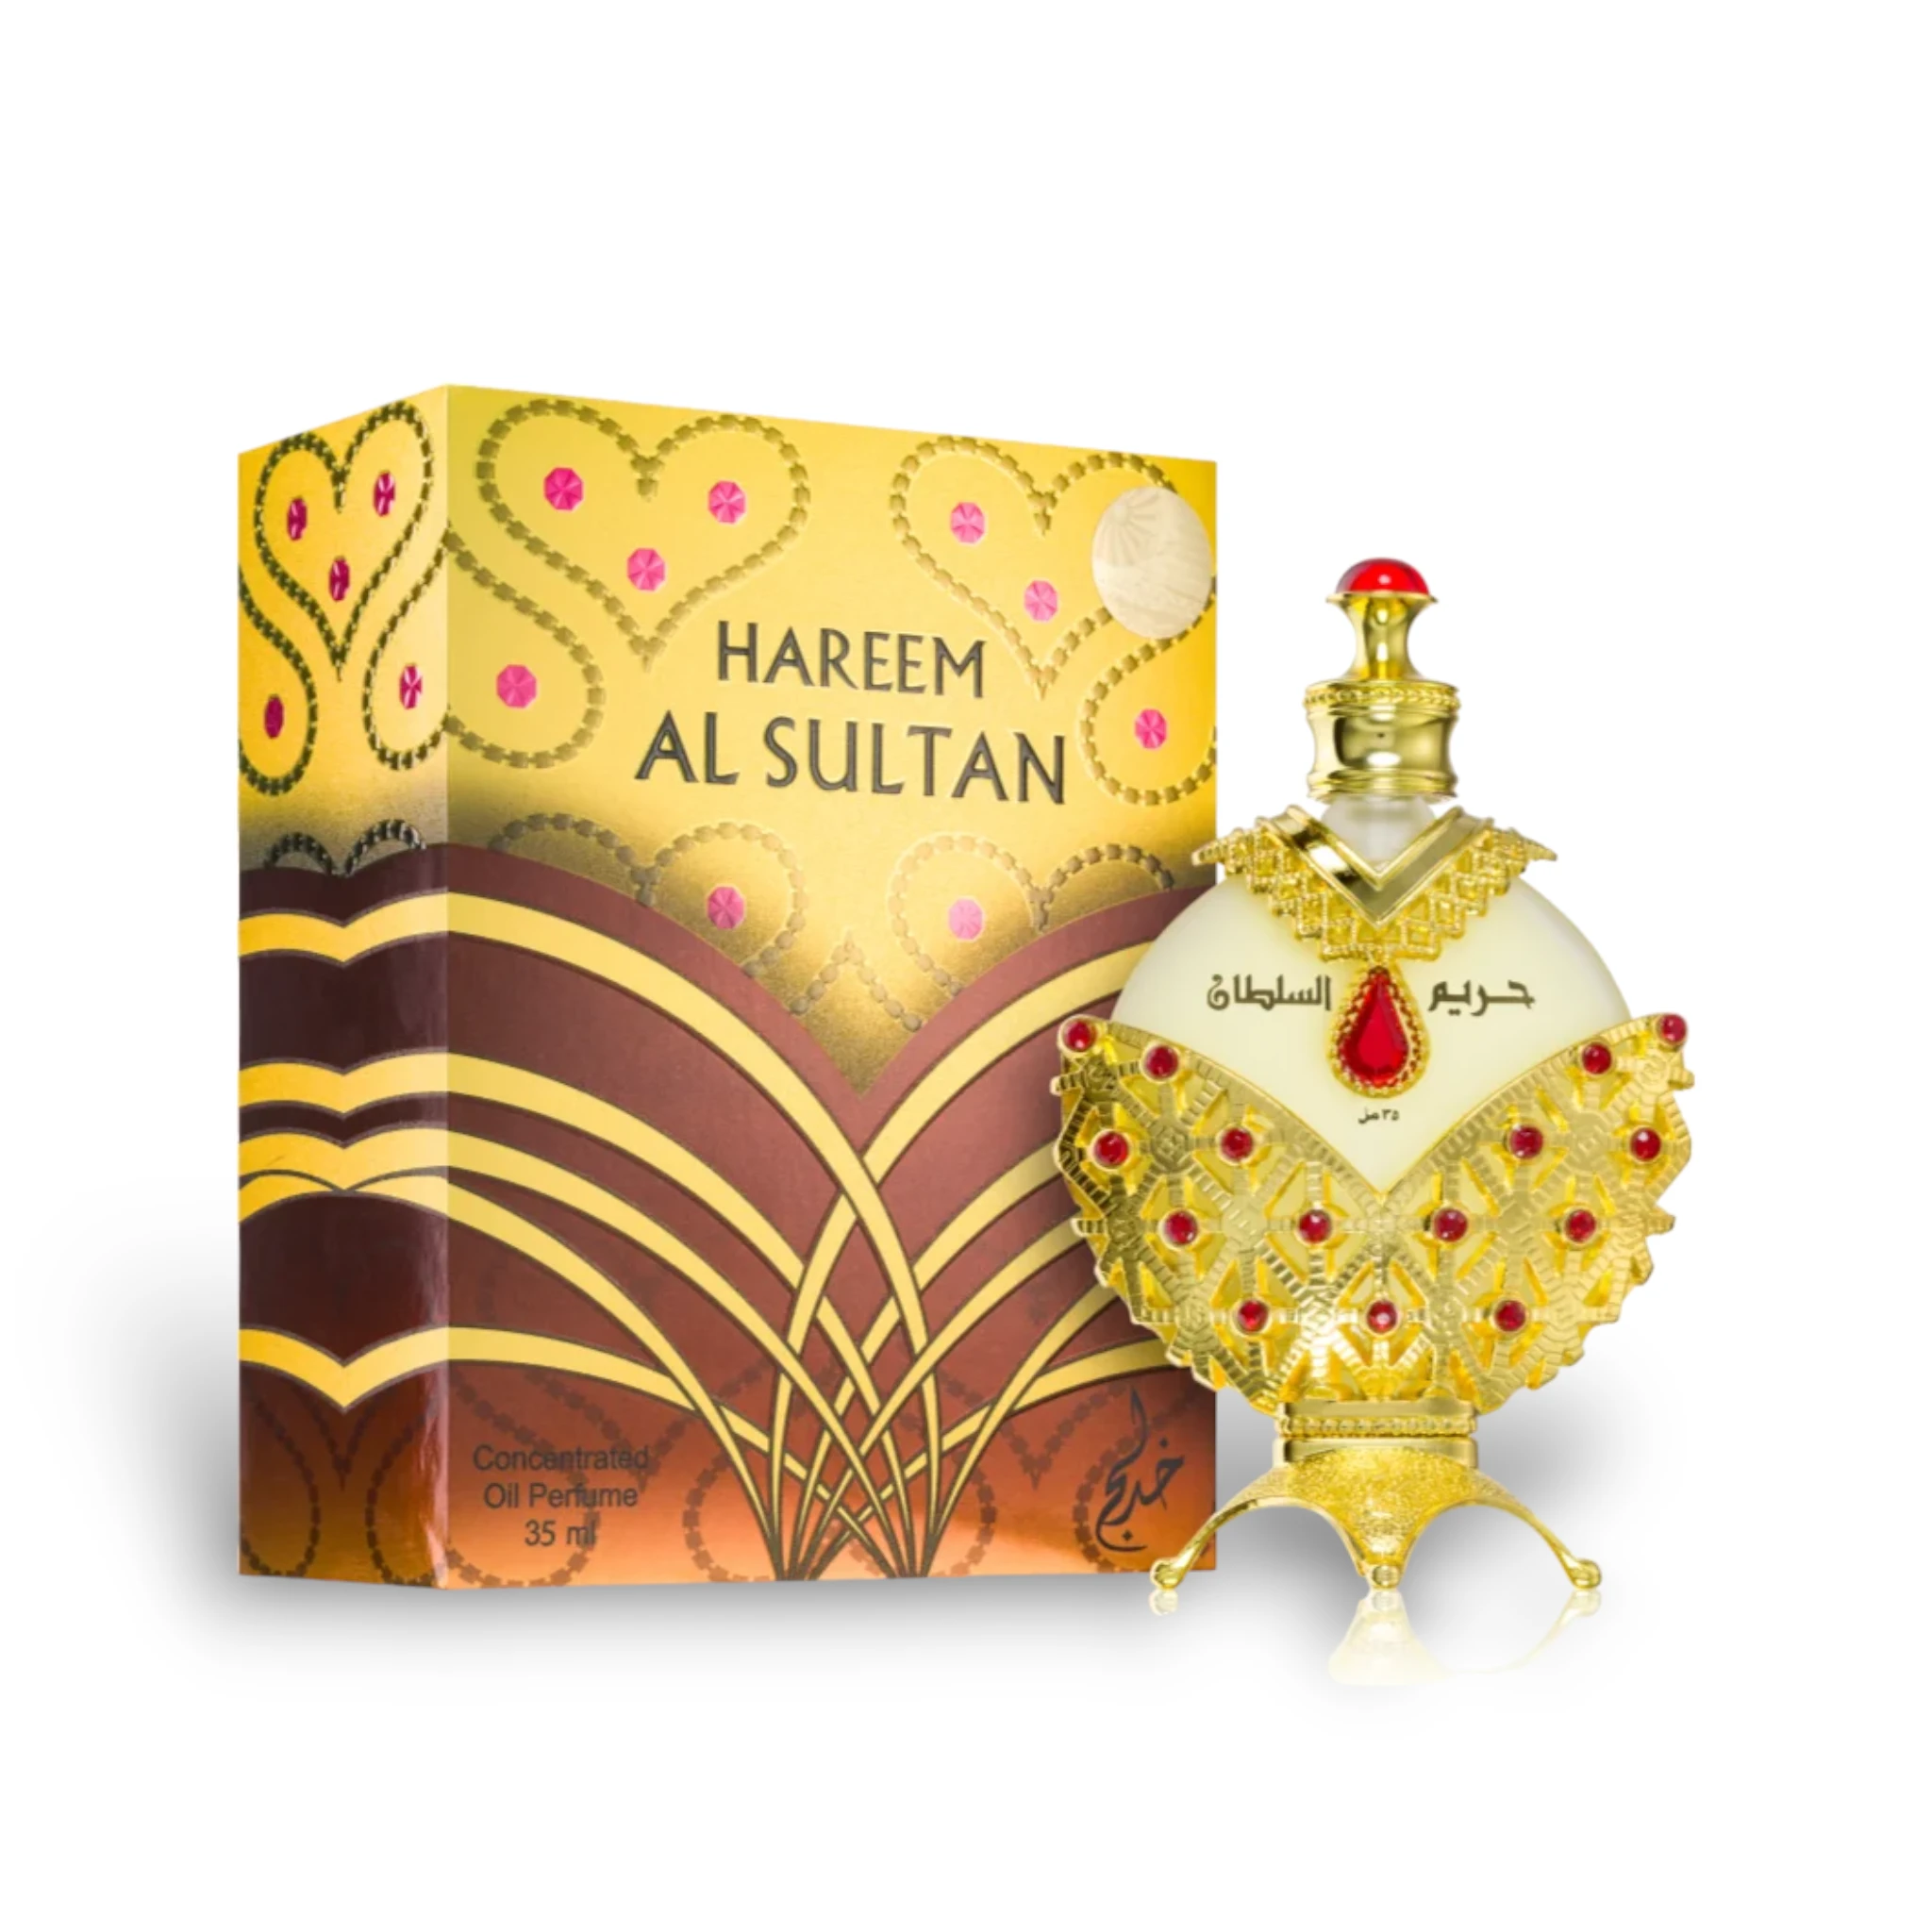 Hareem Al Sultan Gold Concentrated Perfume Oil Attar 35Ml By Khadlaj